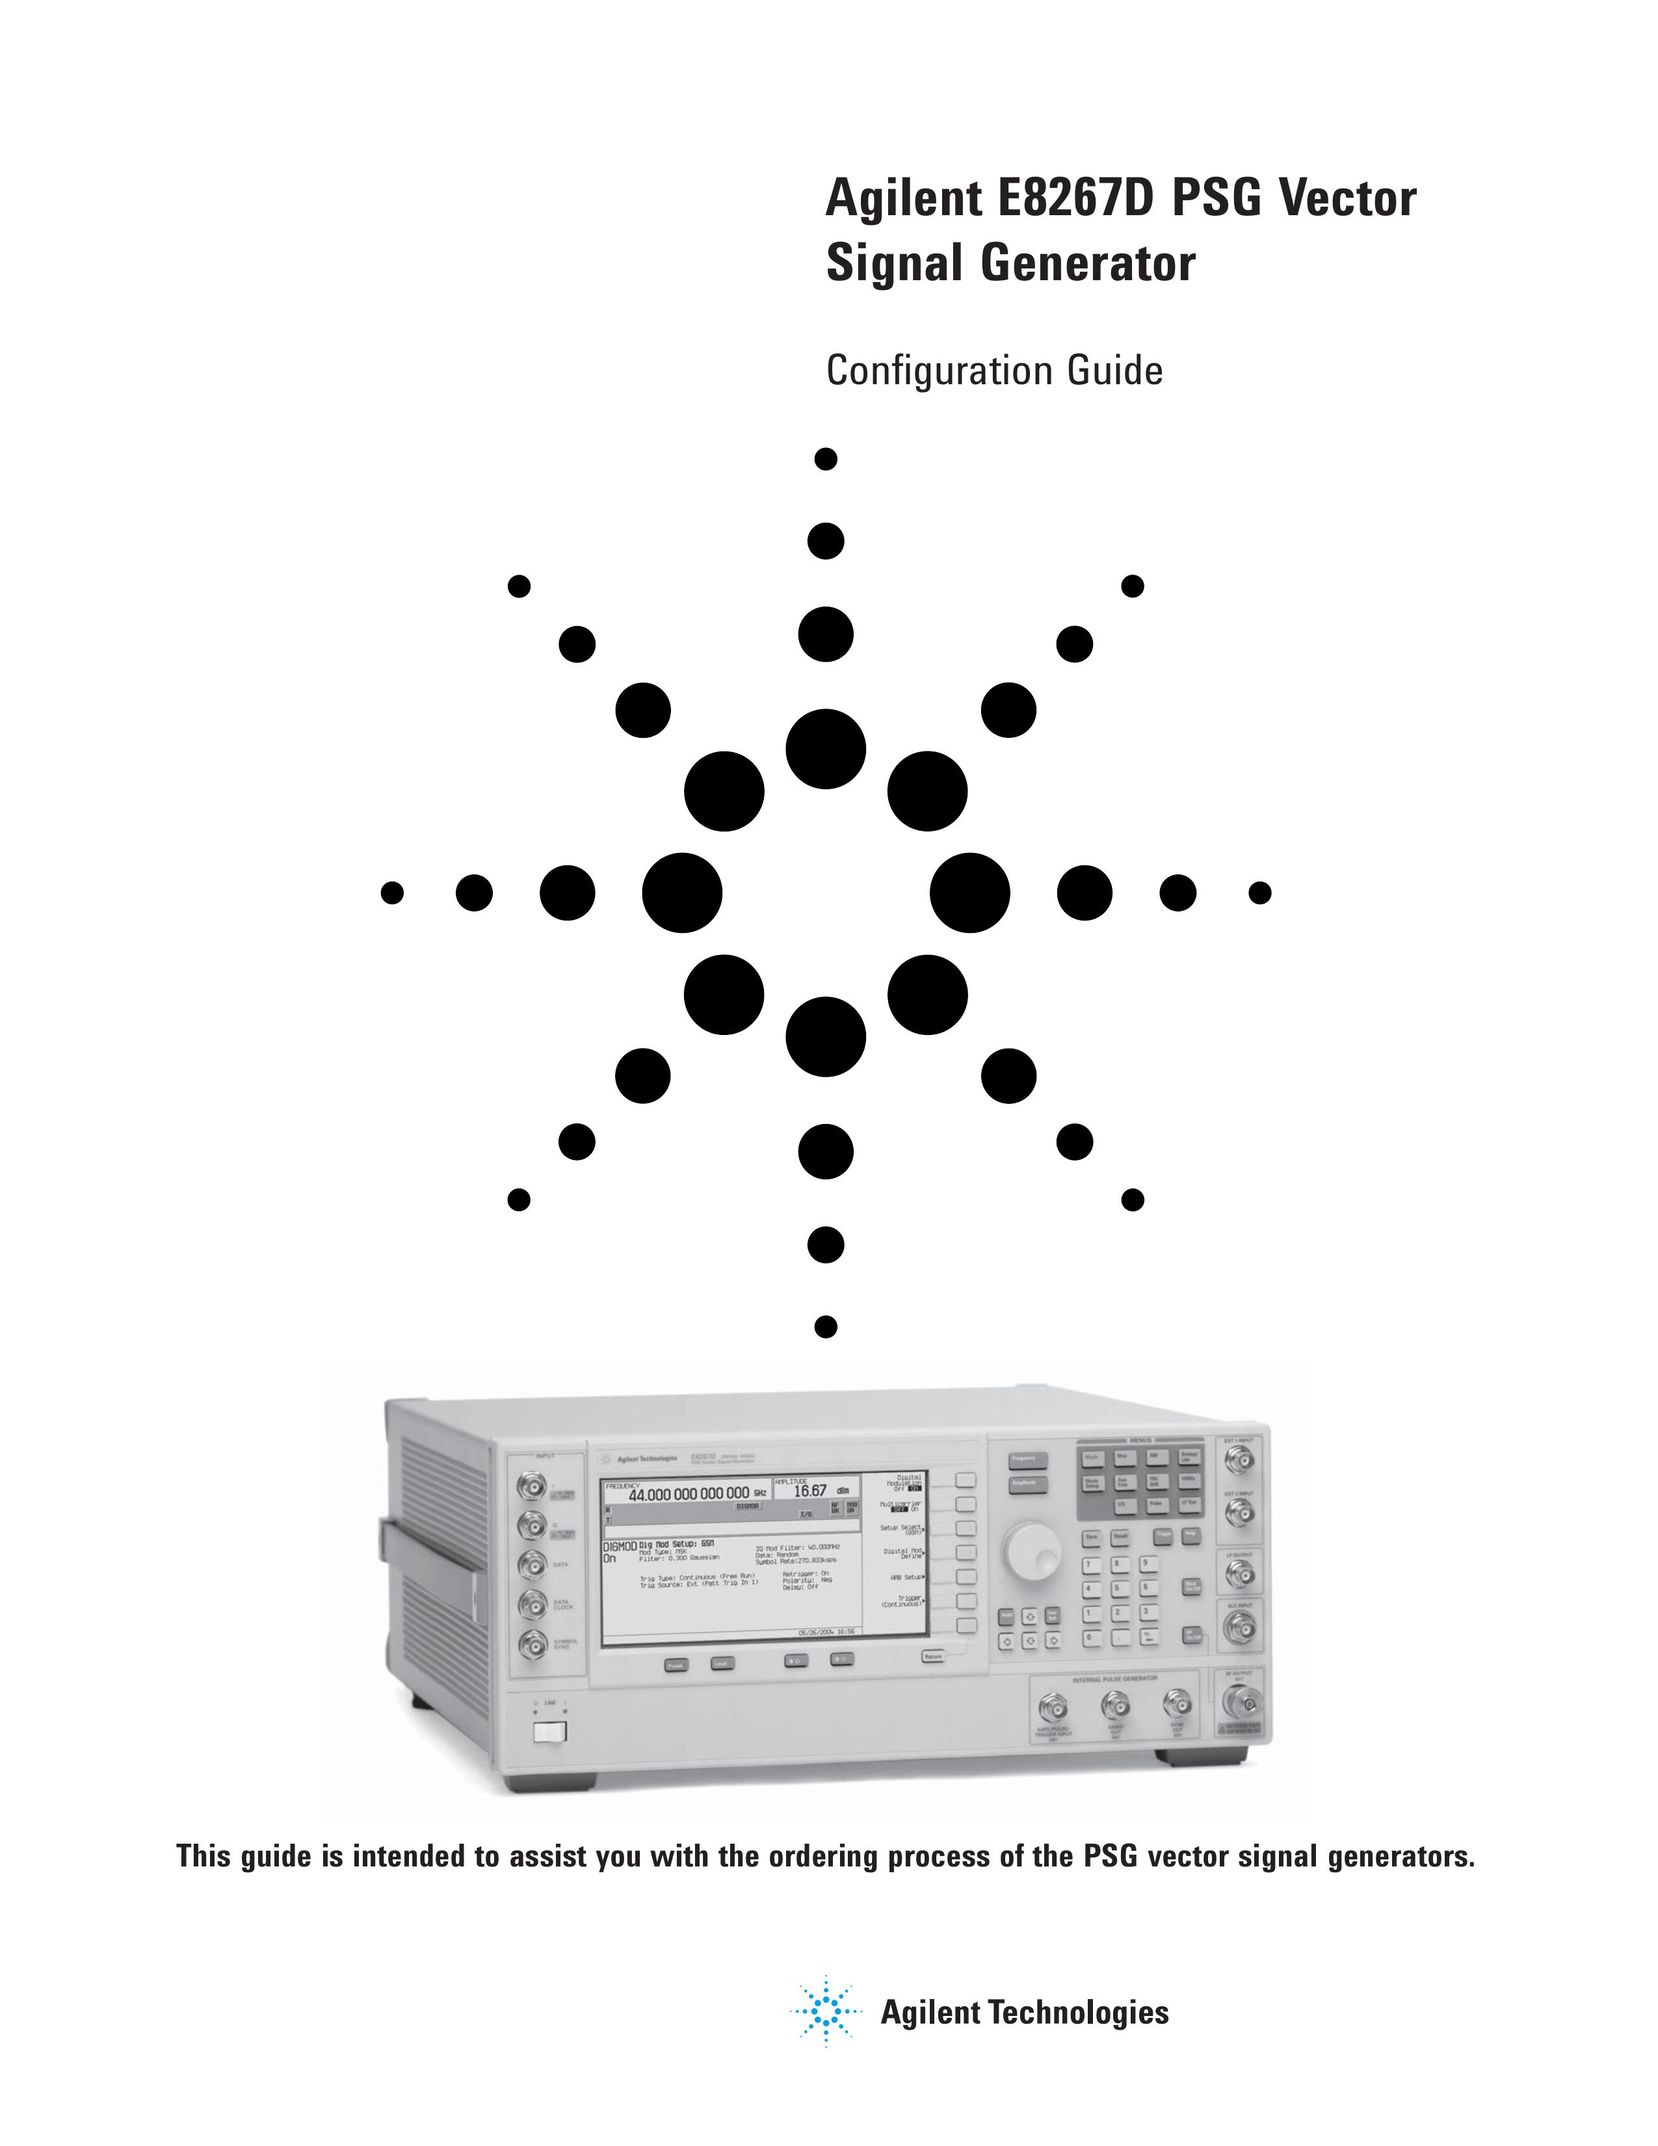 Agilent Technologies E8267D Stereo System User Manual